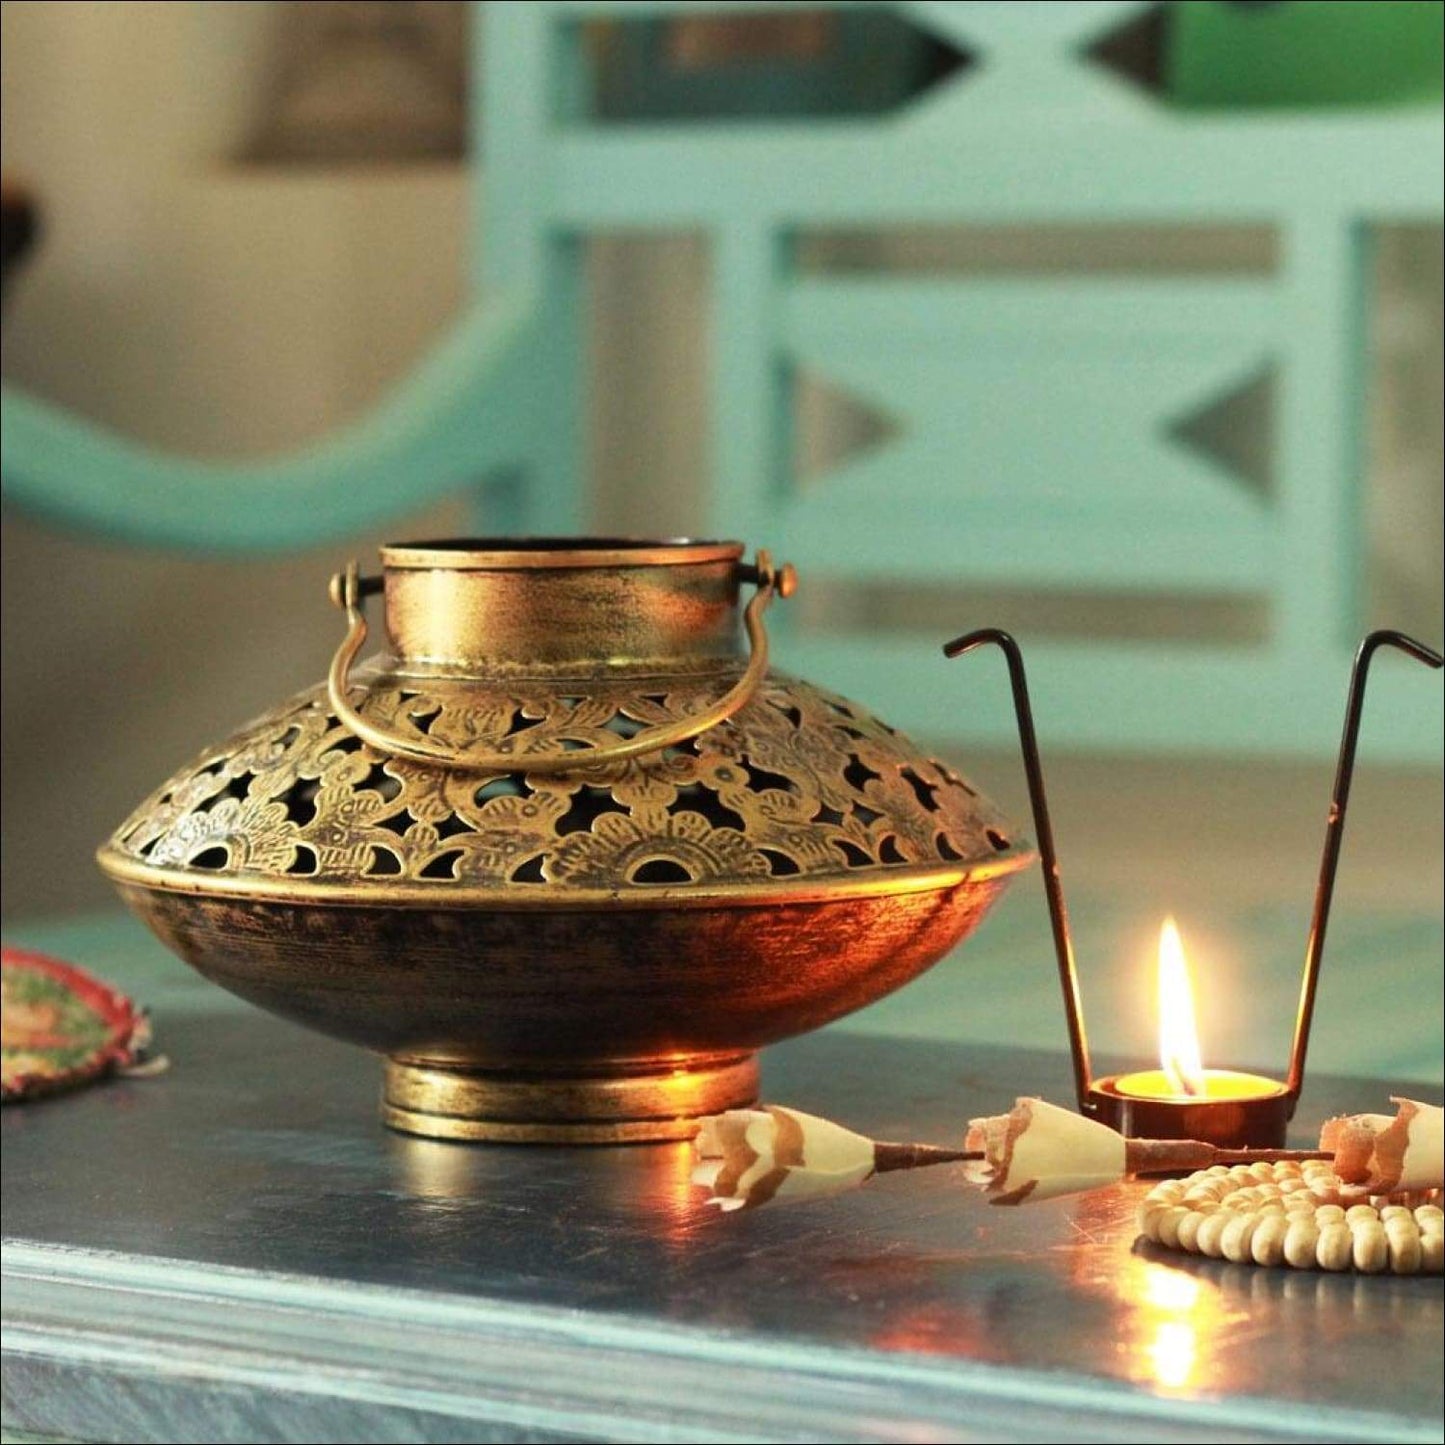 Kamandal Diya Pot - A Dhoop Incense Holder (BxH : 23cm x 14cm)